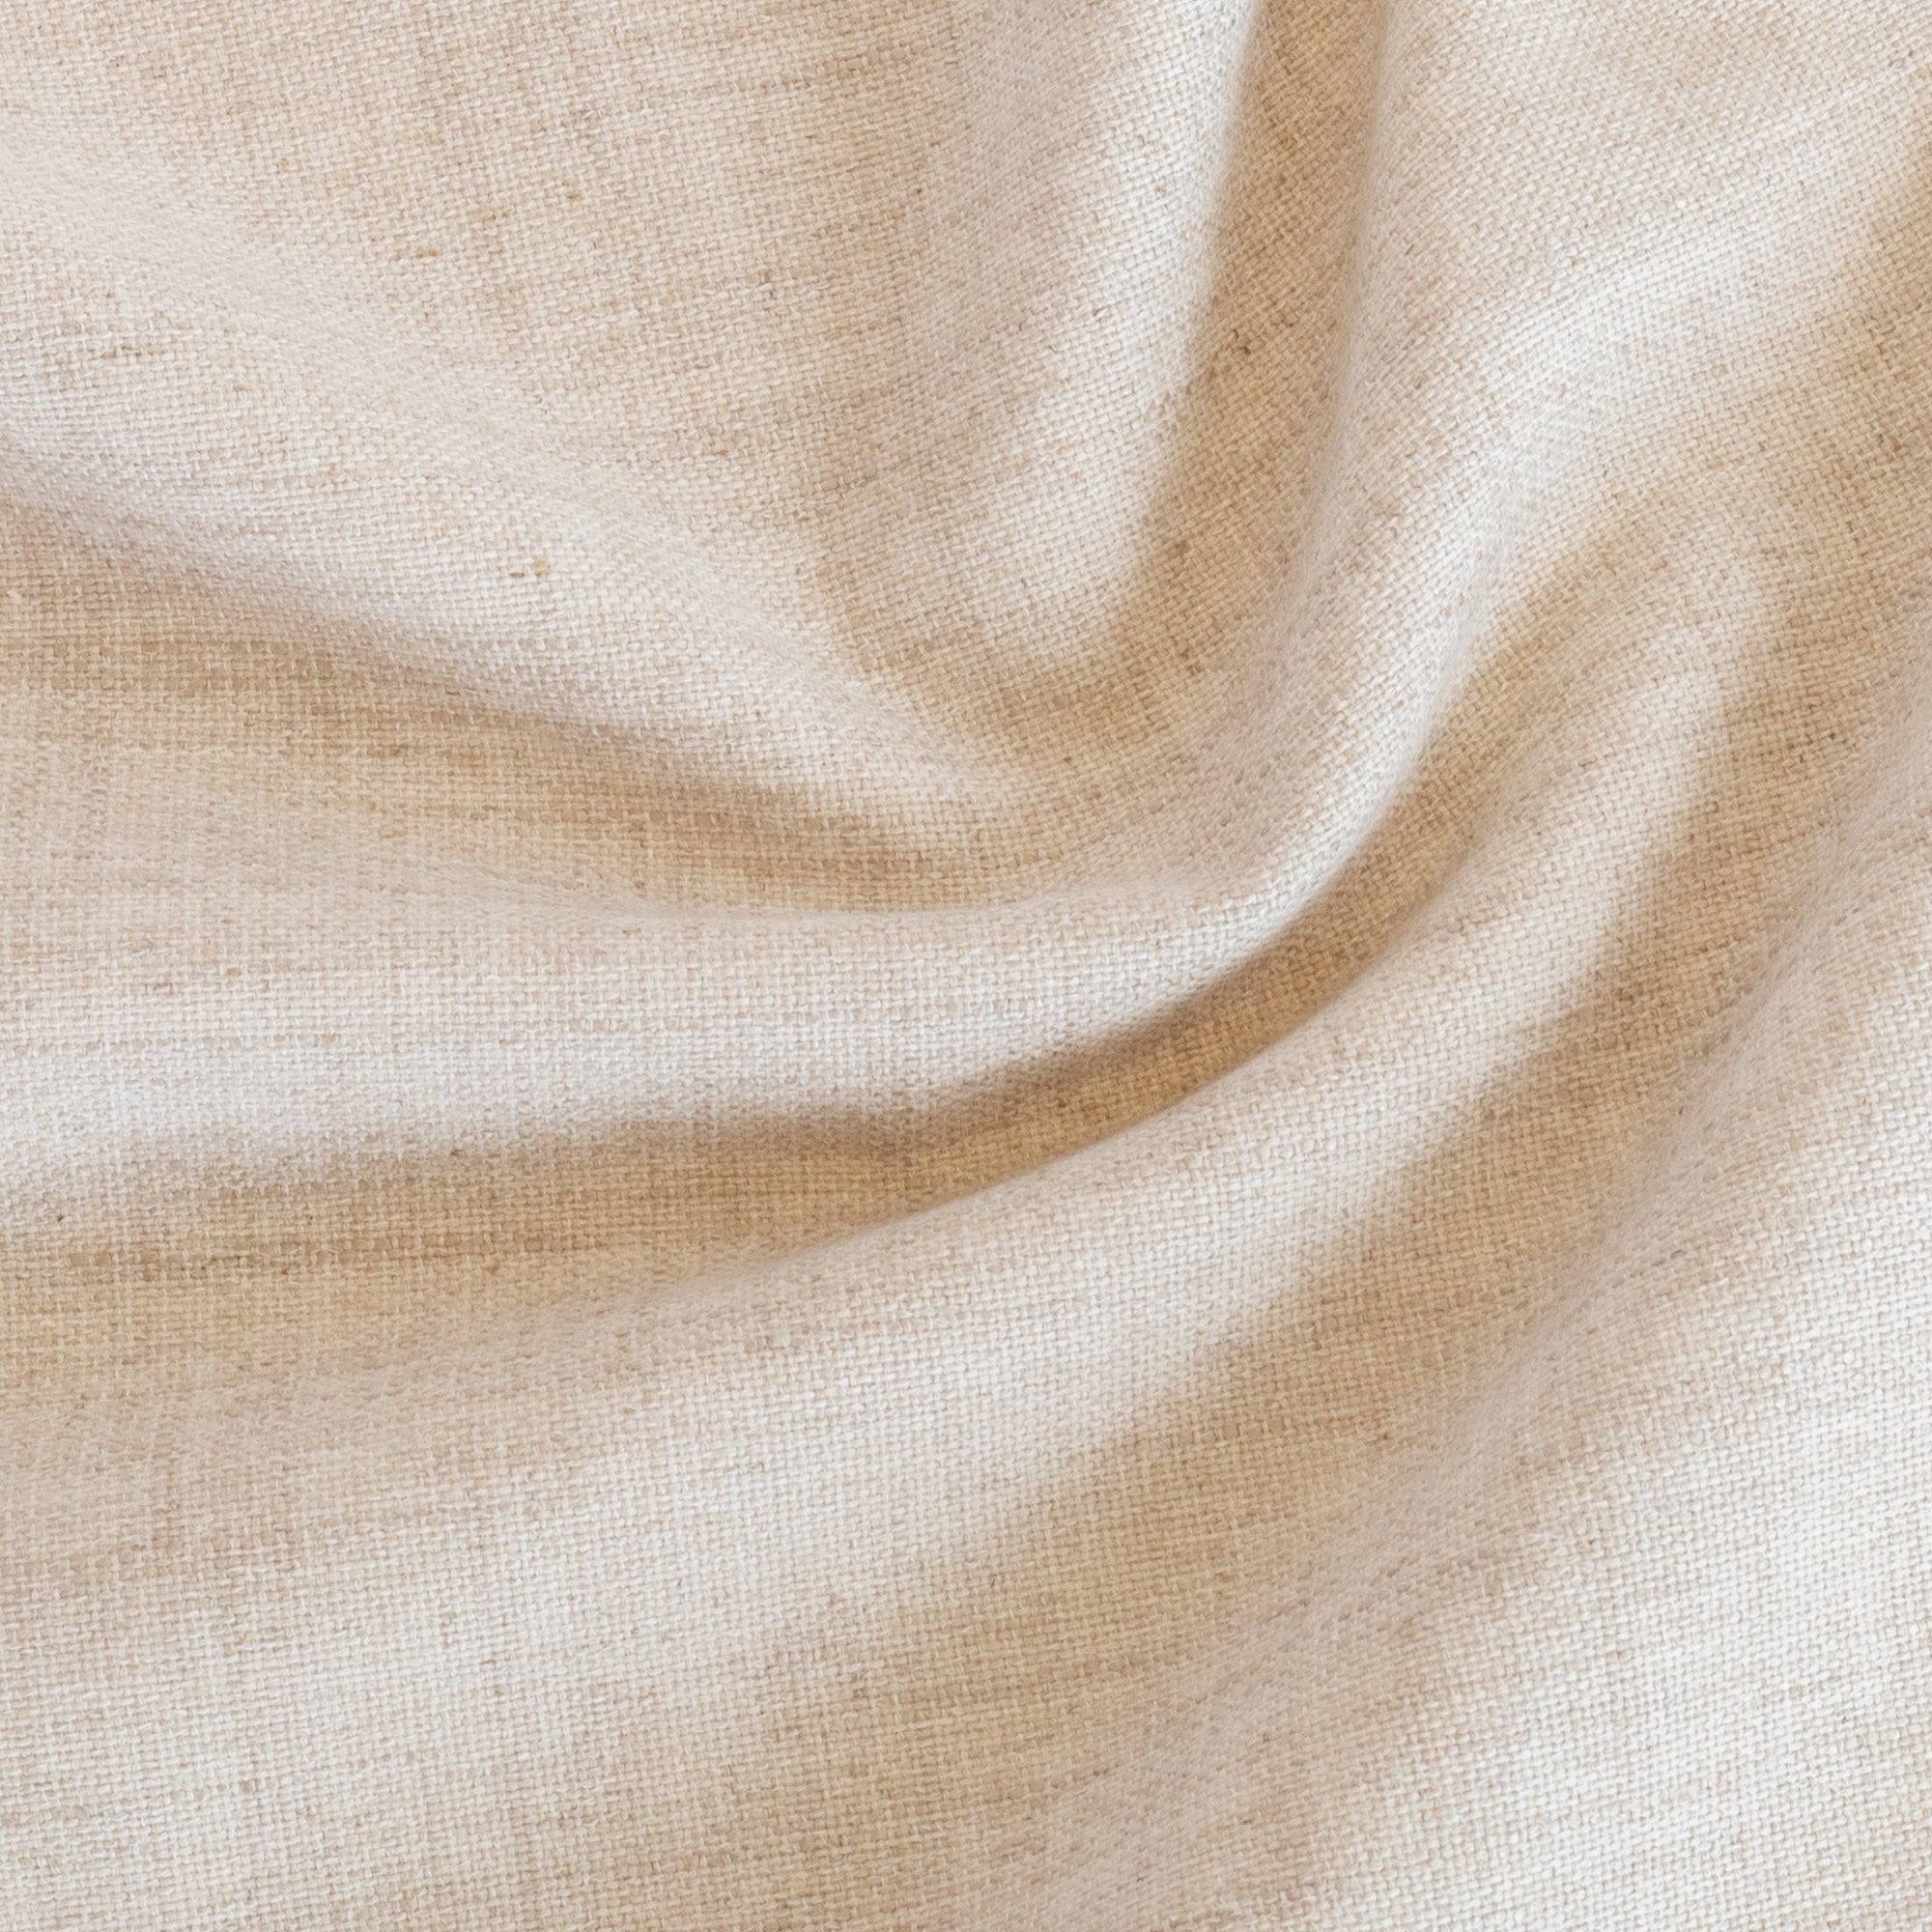 a light beige home decor tonic living fabric